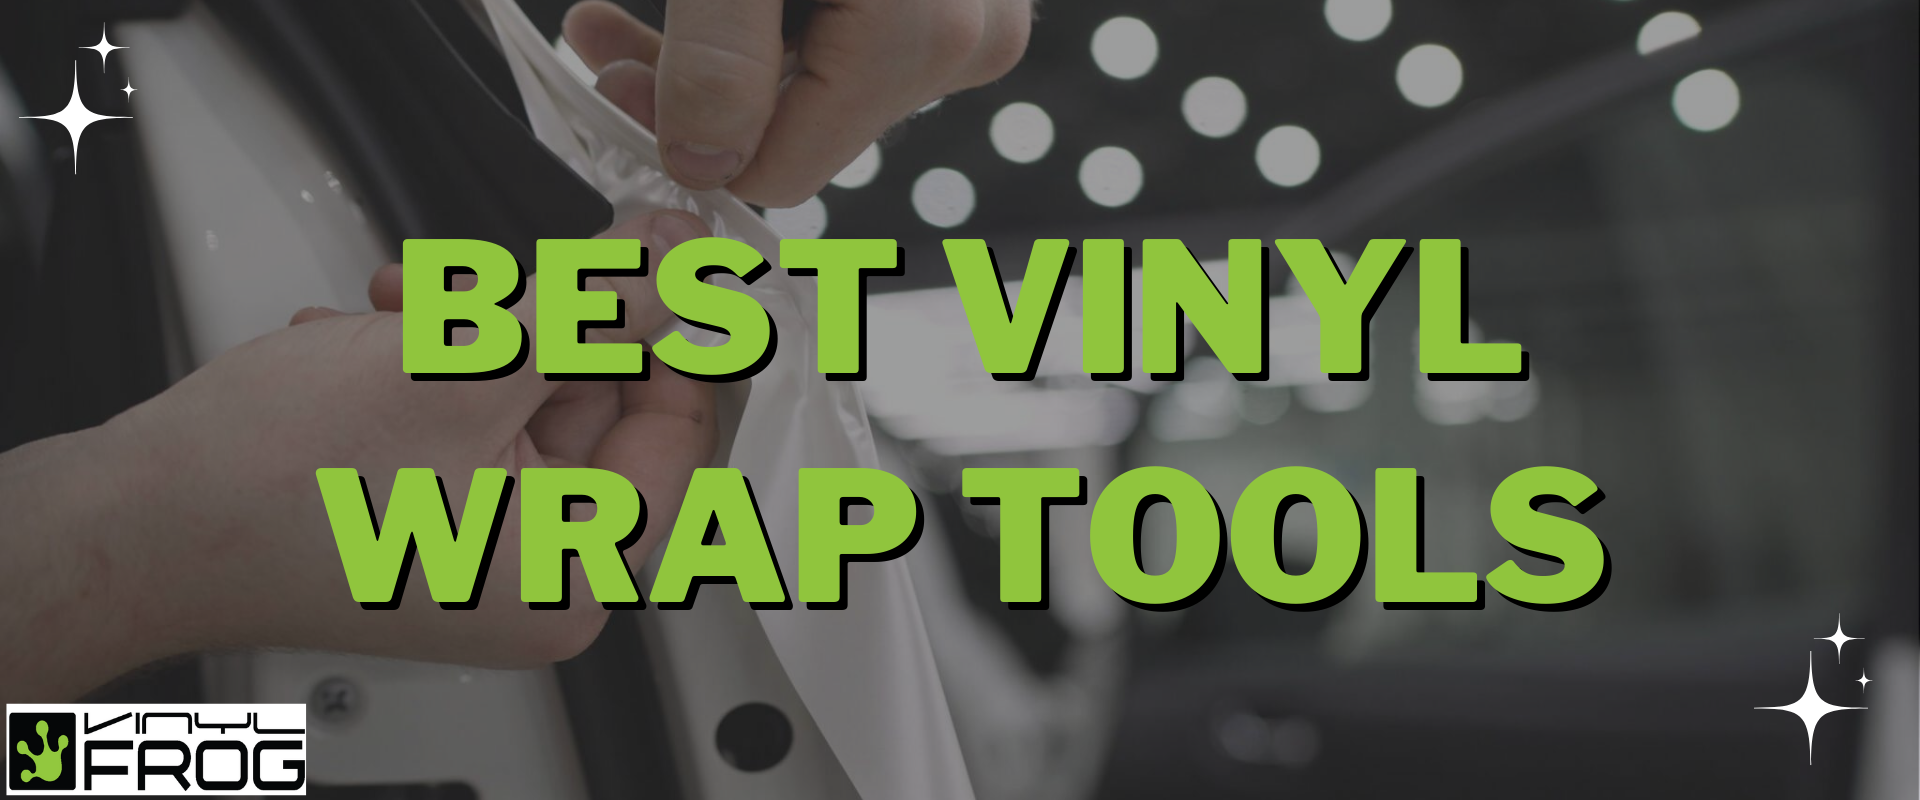 Best Vinyl Wrap Tools